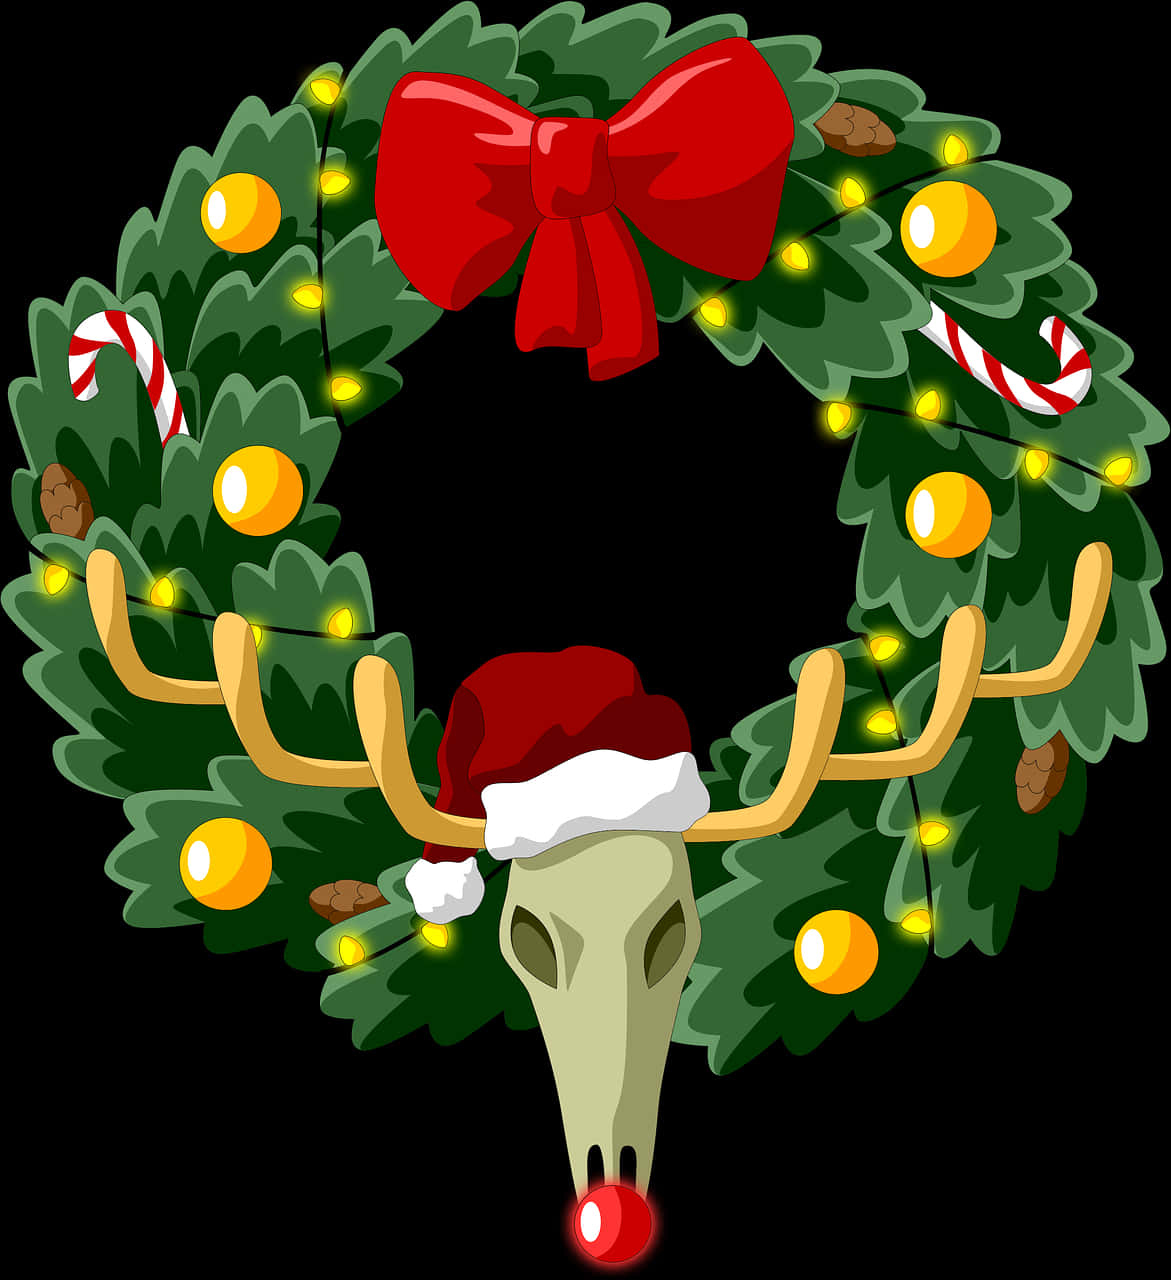 Wreath With Reindeer